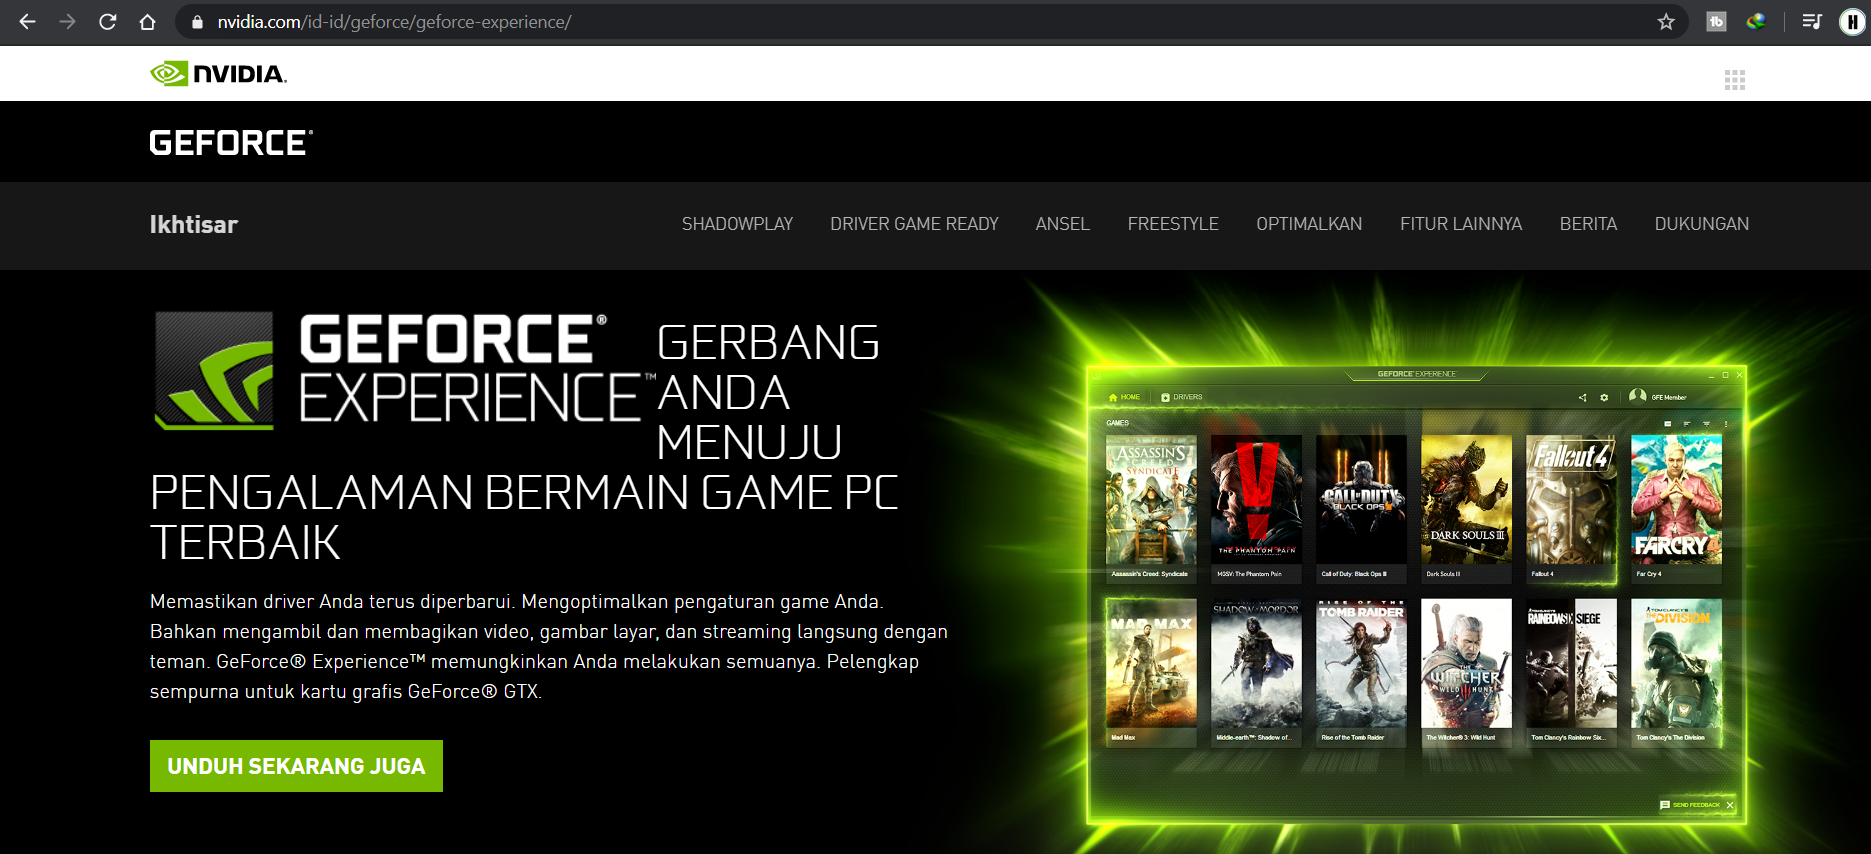 Nvidia experience версии. GEFORCE experience (джифорс экспириенс). GEFORCE experience в игре. NVIDIA приложение. Приложение NVIDIA GEFORCE experience.